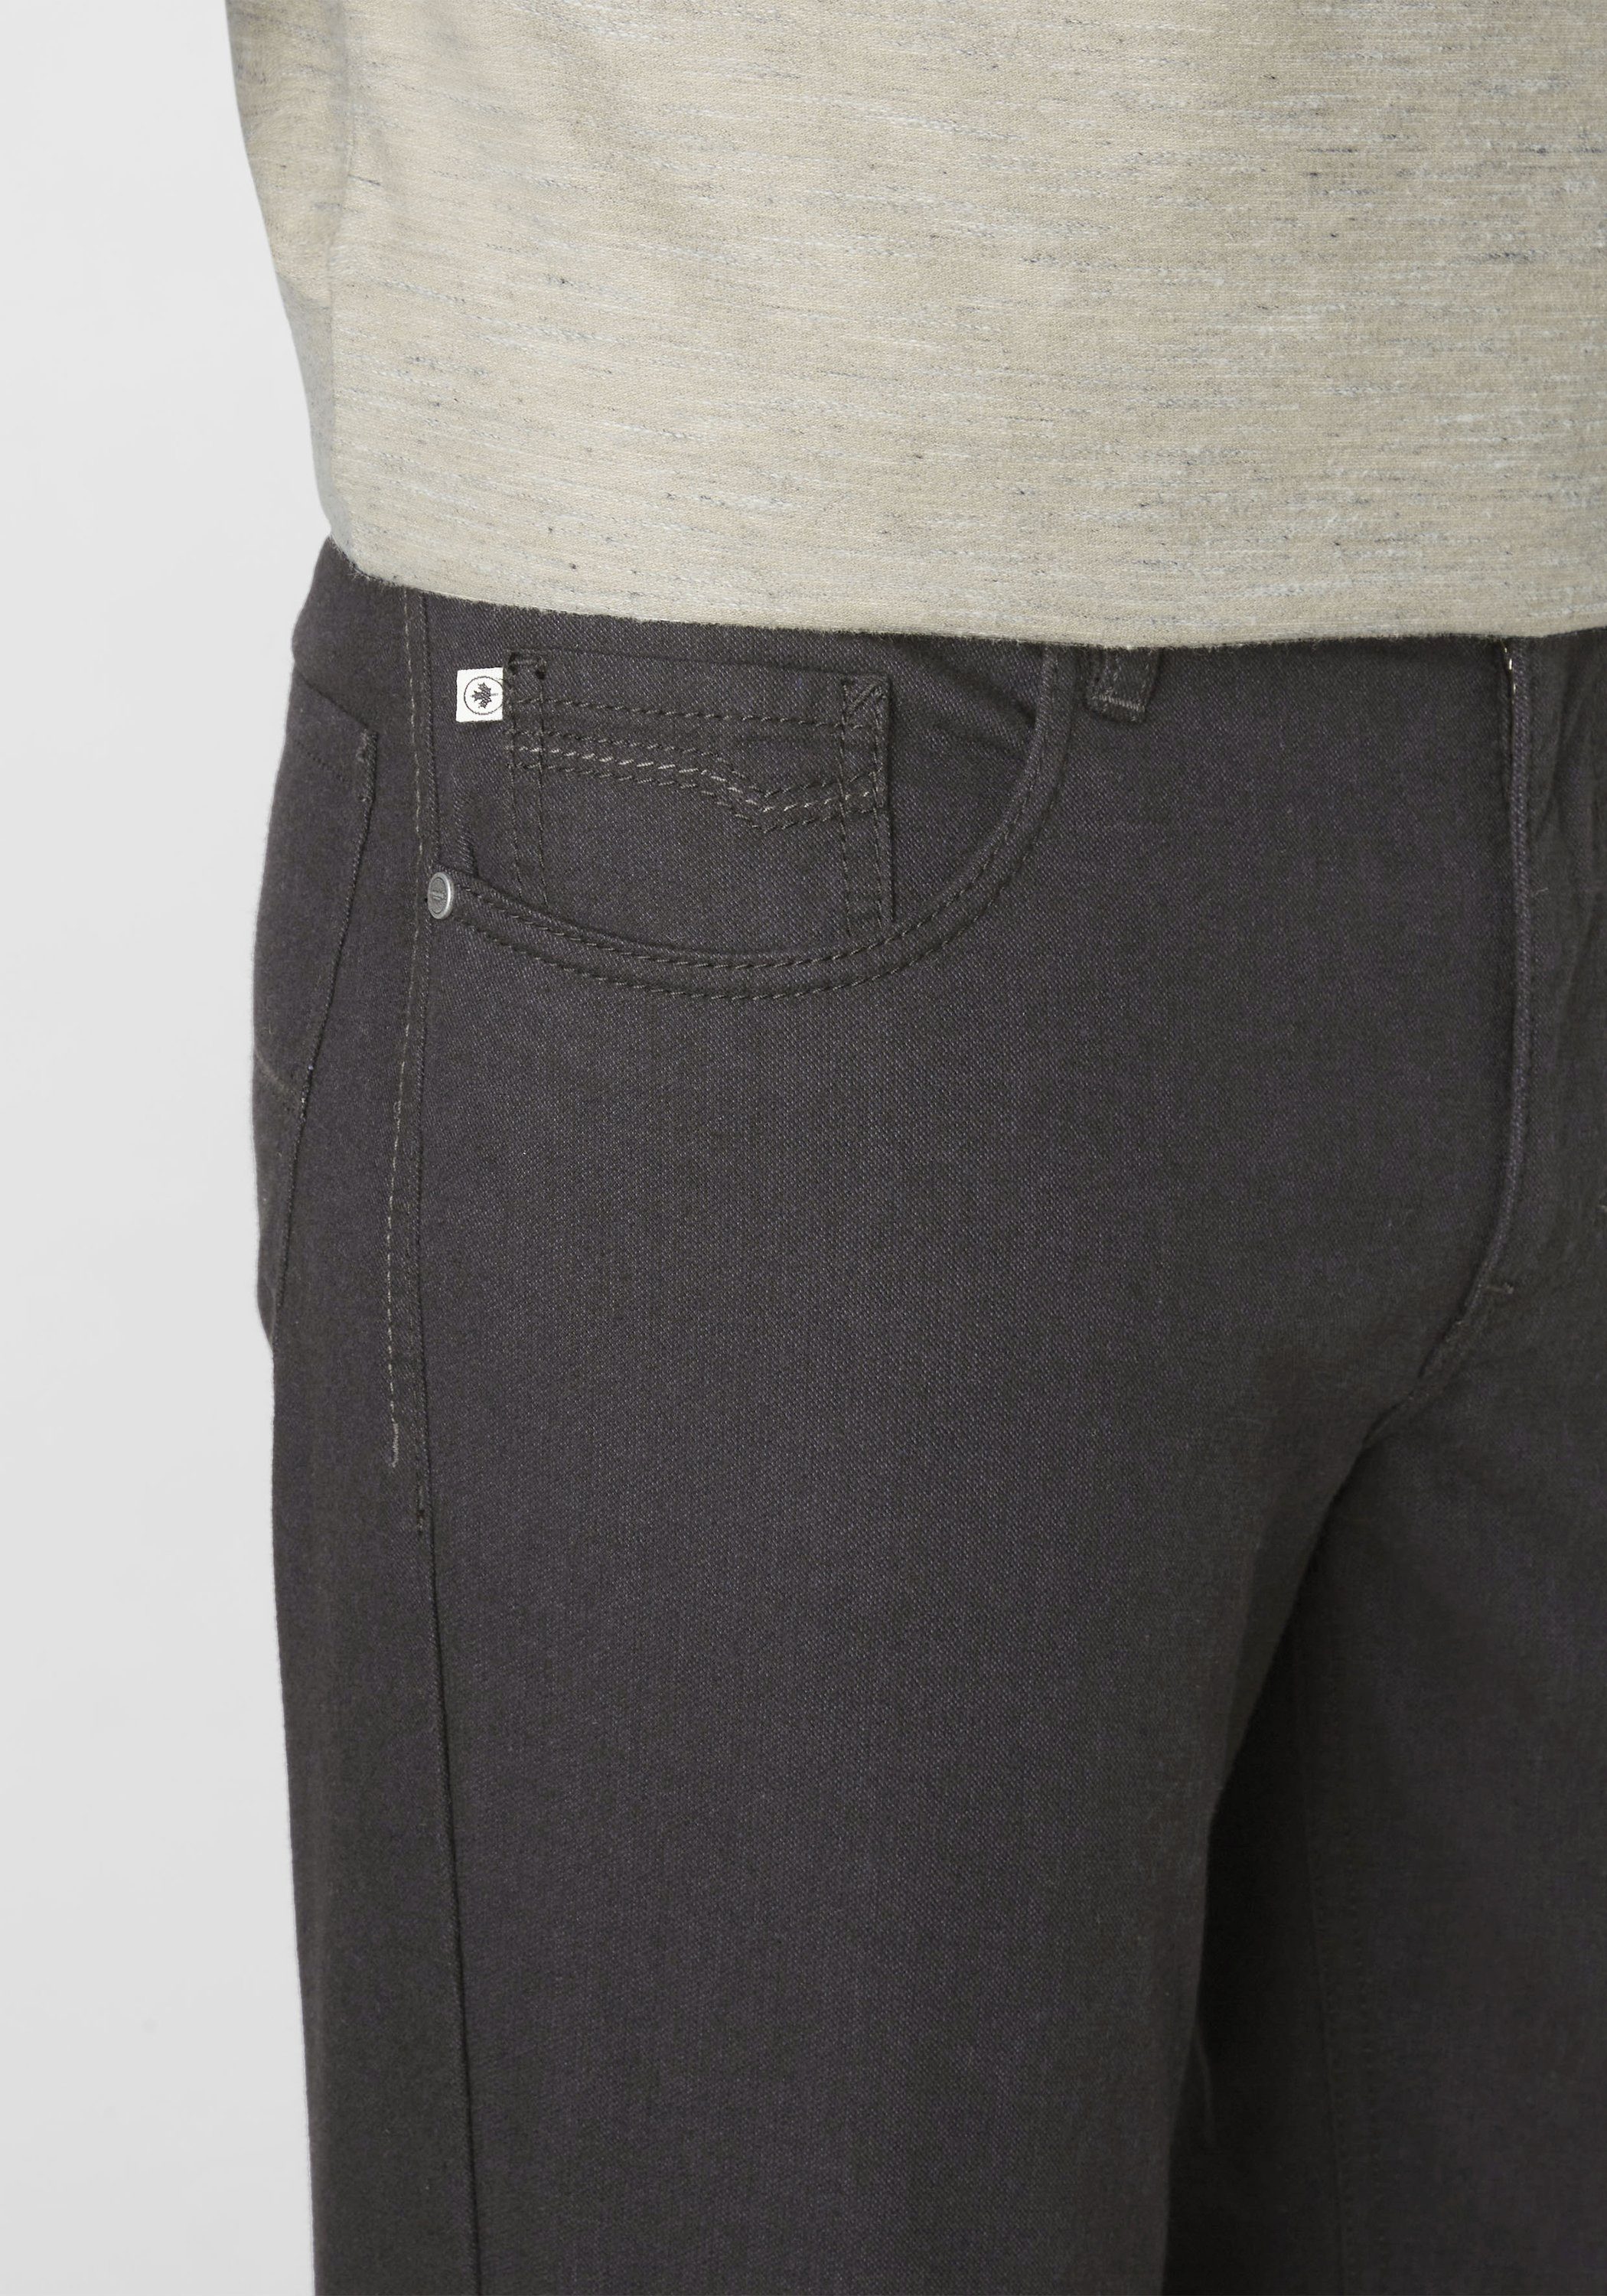 Redpoint Stoffhose MILTON Regular Fit Stretch-Qualität Hose in grey 5-Pocket